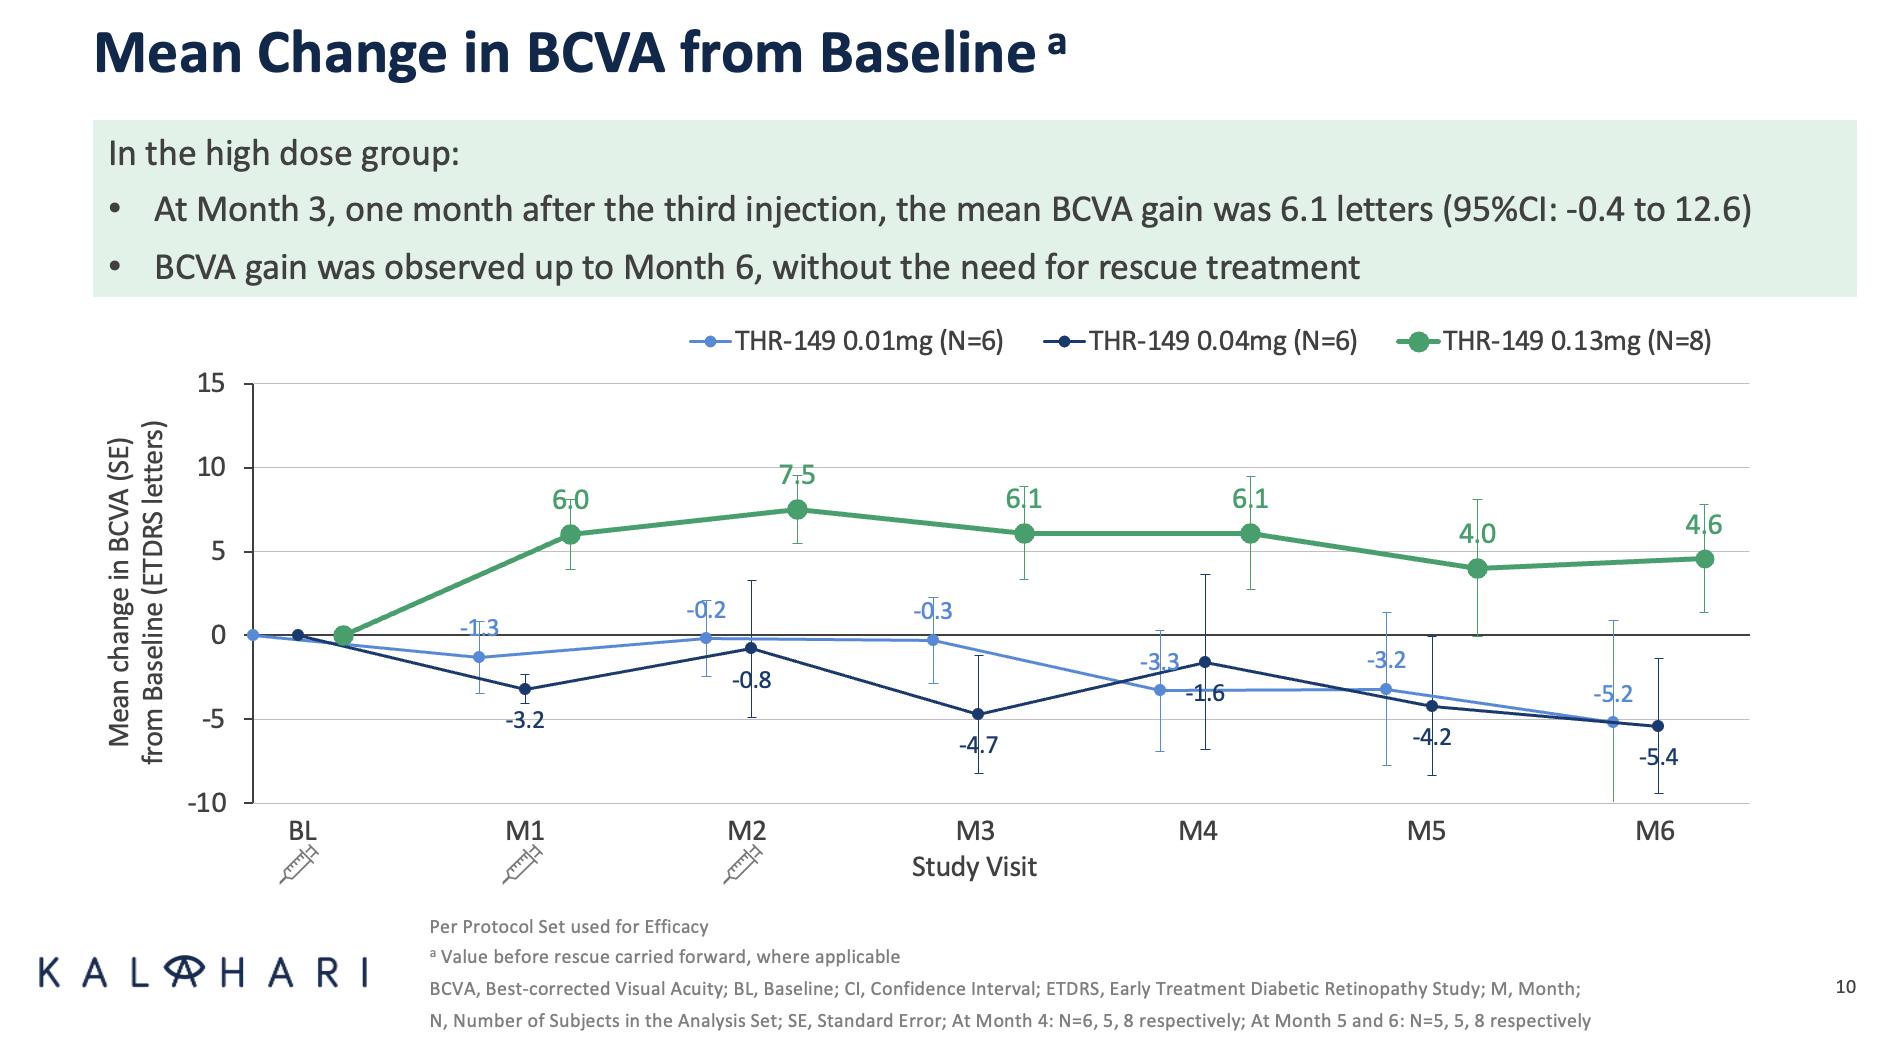 Mean change in BCVA from baseline KALAHARI study